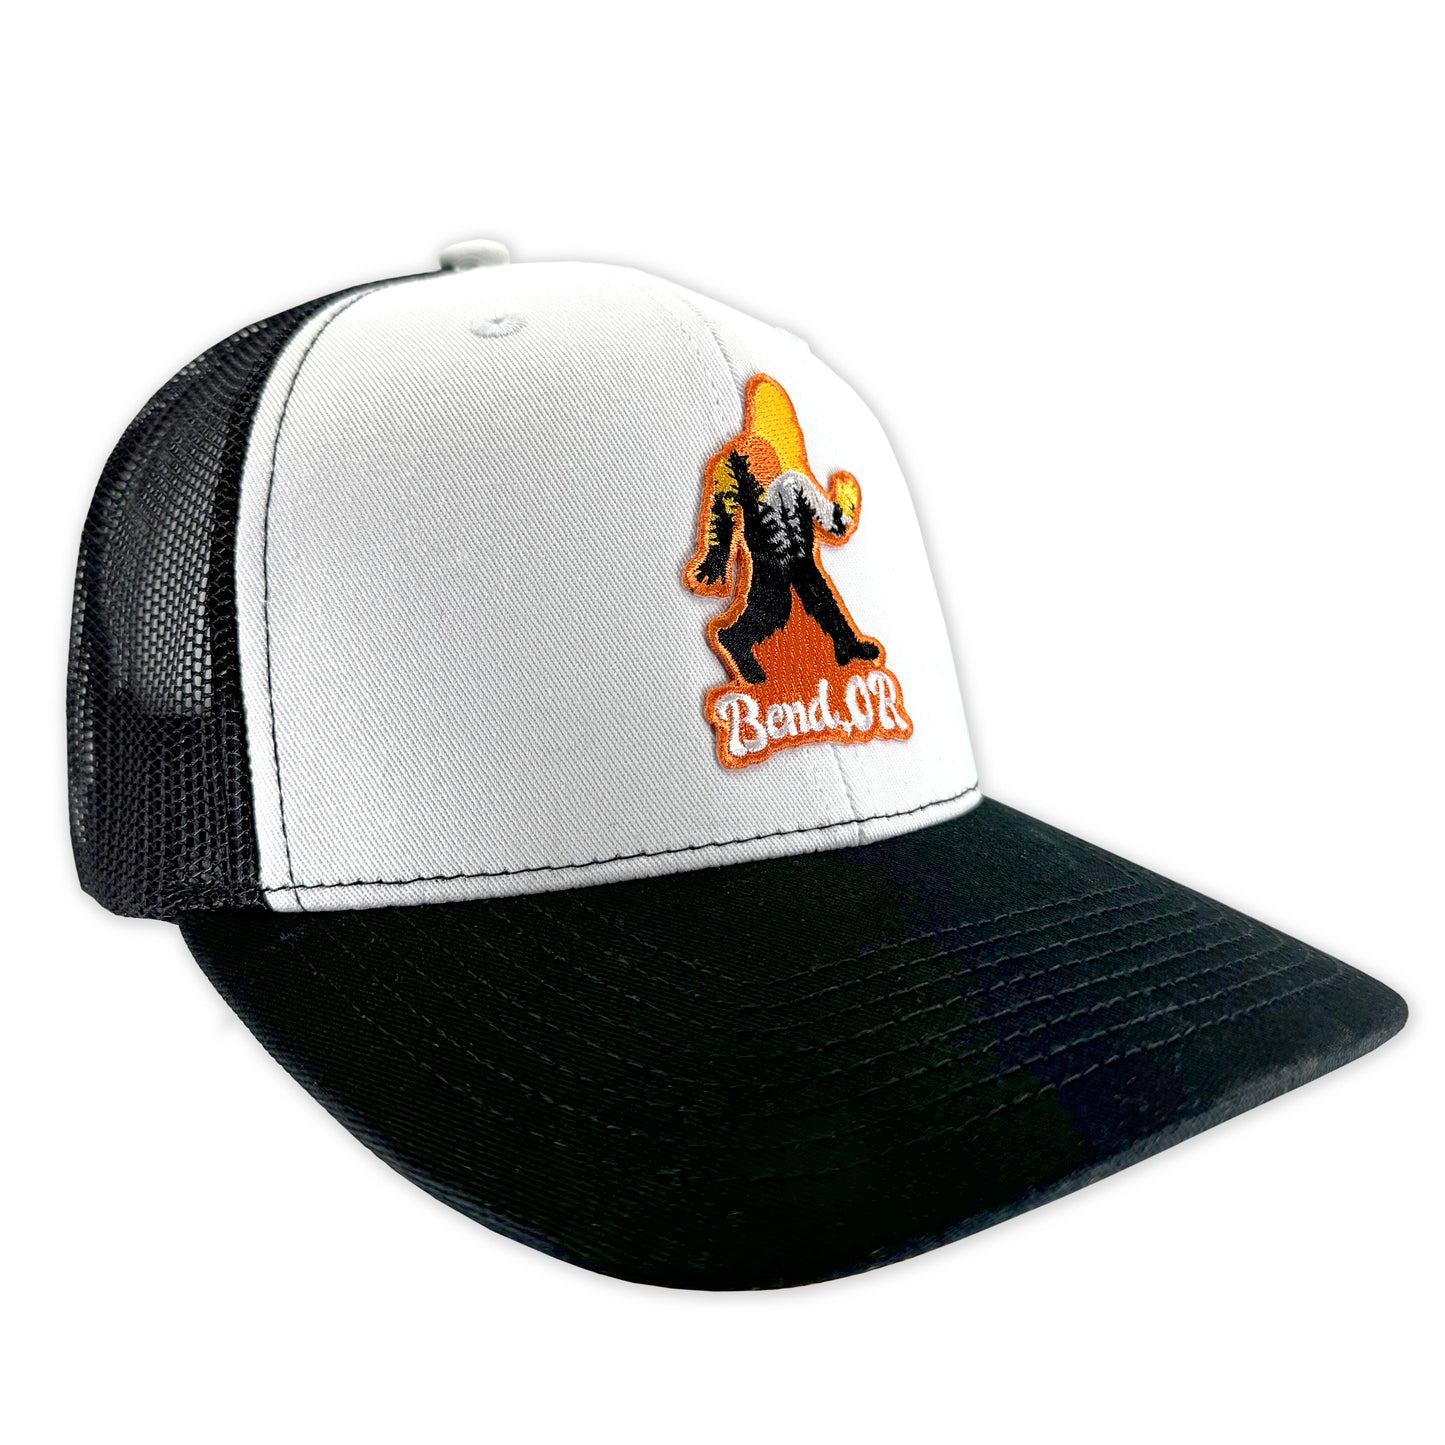 Bend Squatch | Curved bill snapback hat